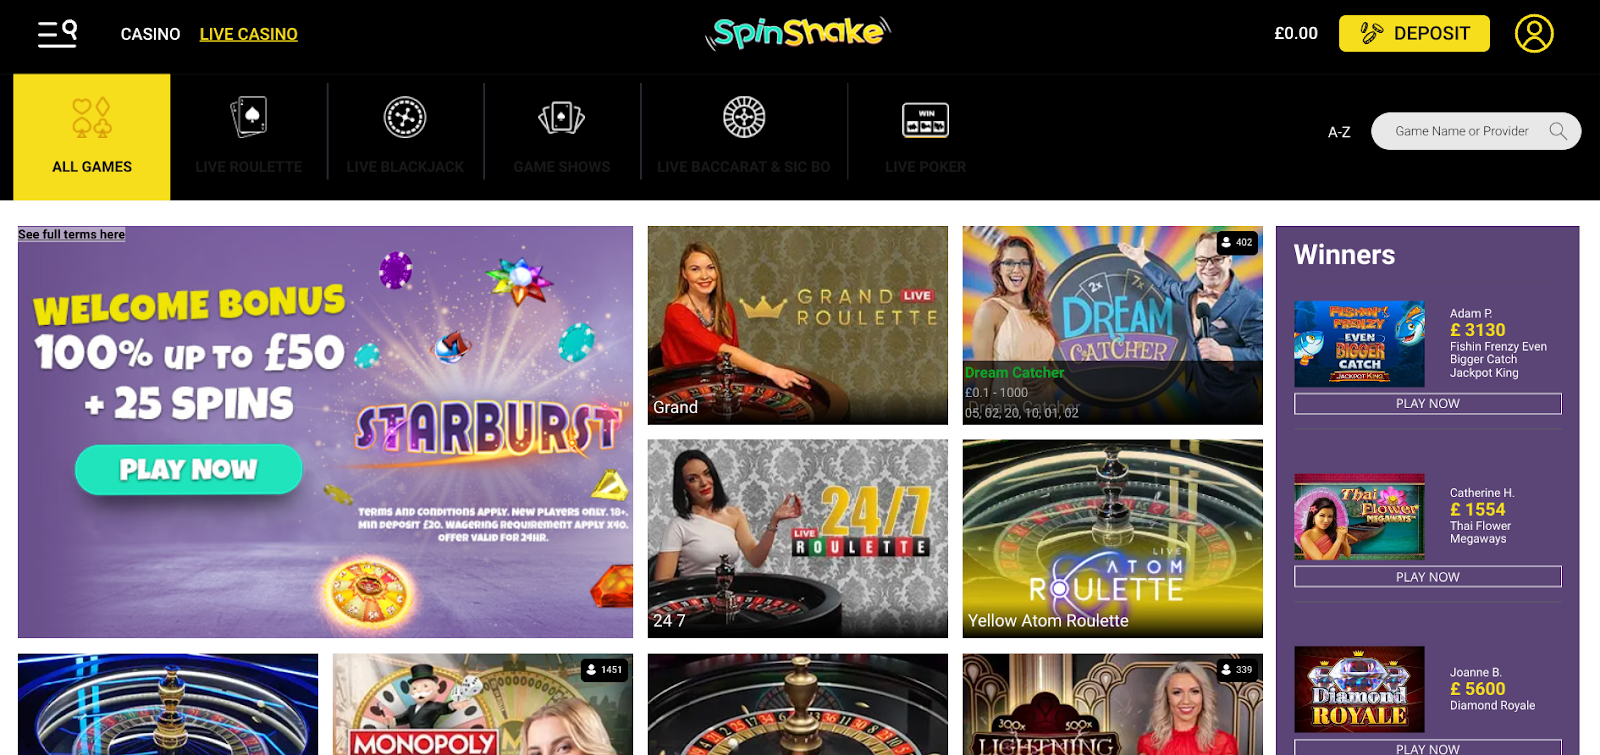 Spin Shake Live Casino